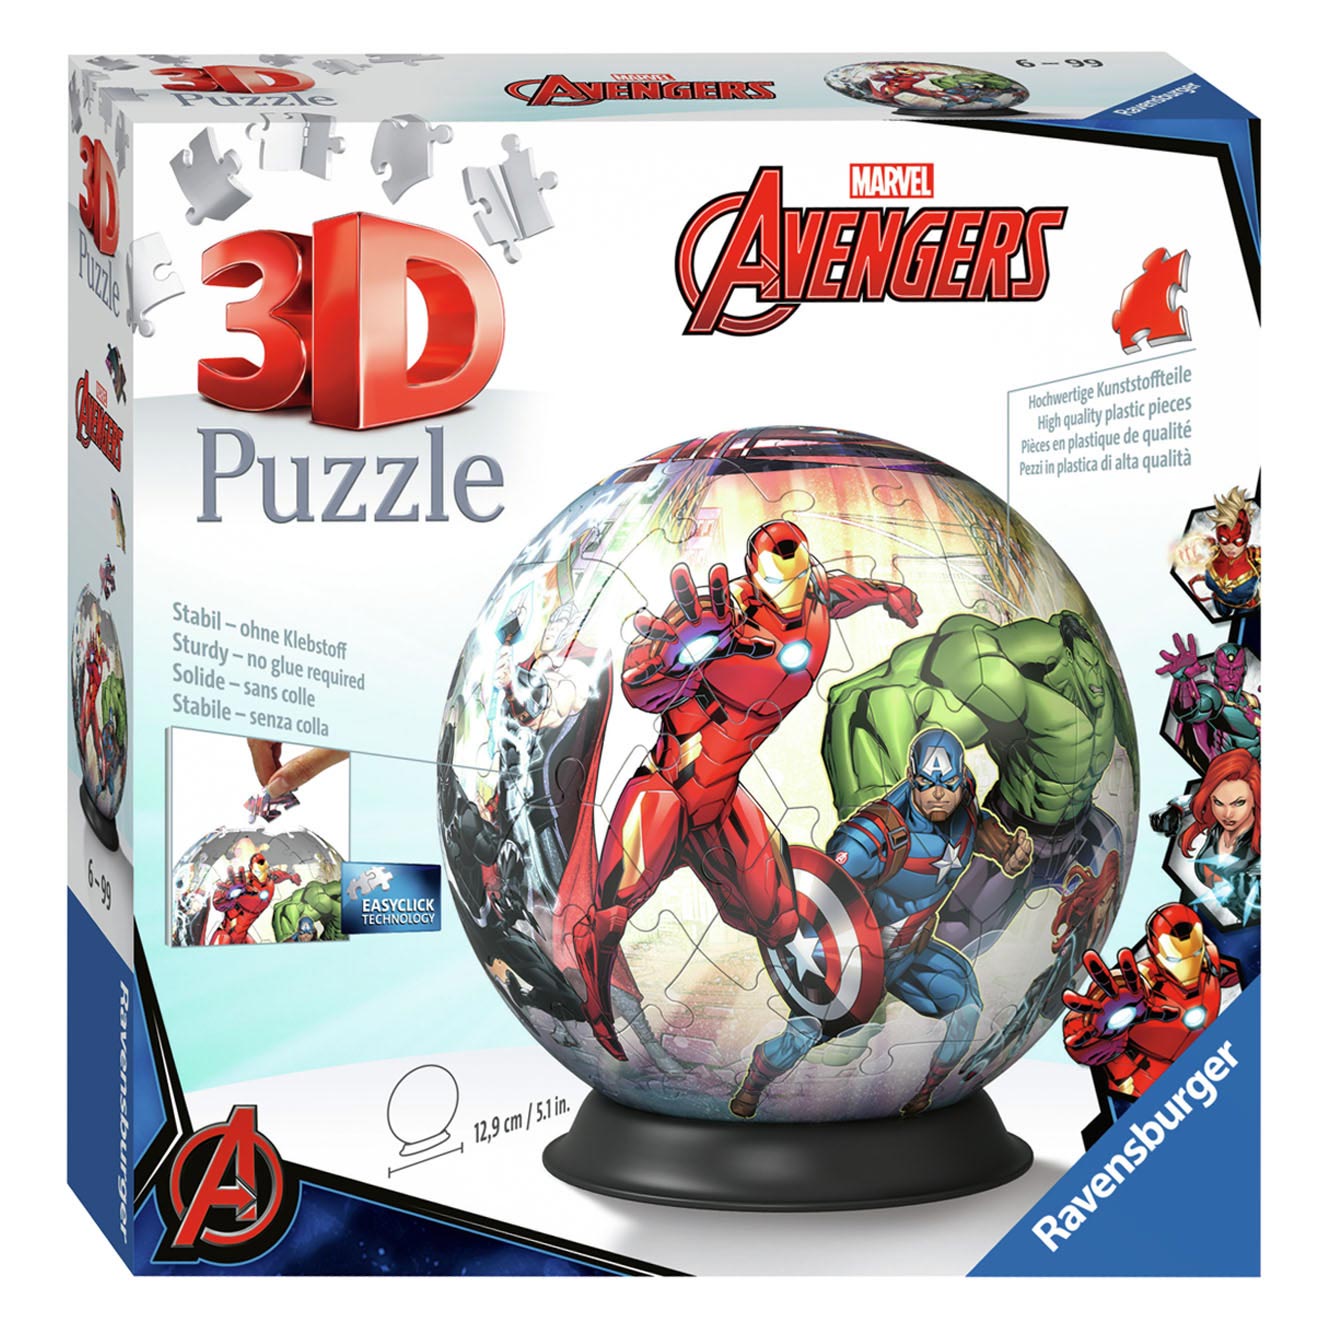 Mineraalwater Methode elegant Marvel Avengers 3D Puzzel, 72st. online kopen? | Lobbes Speelgoed